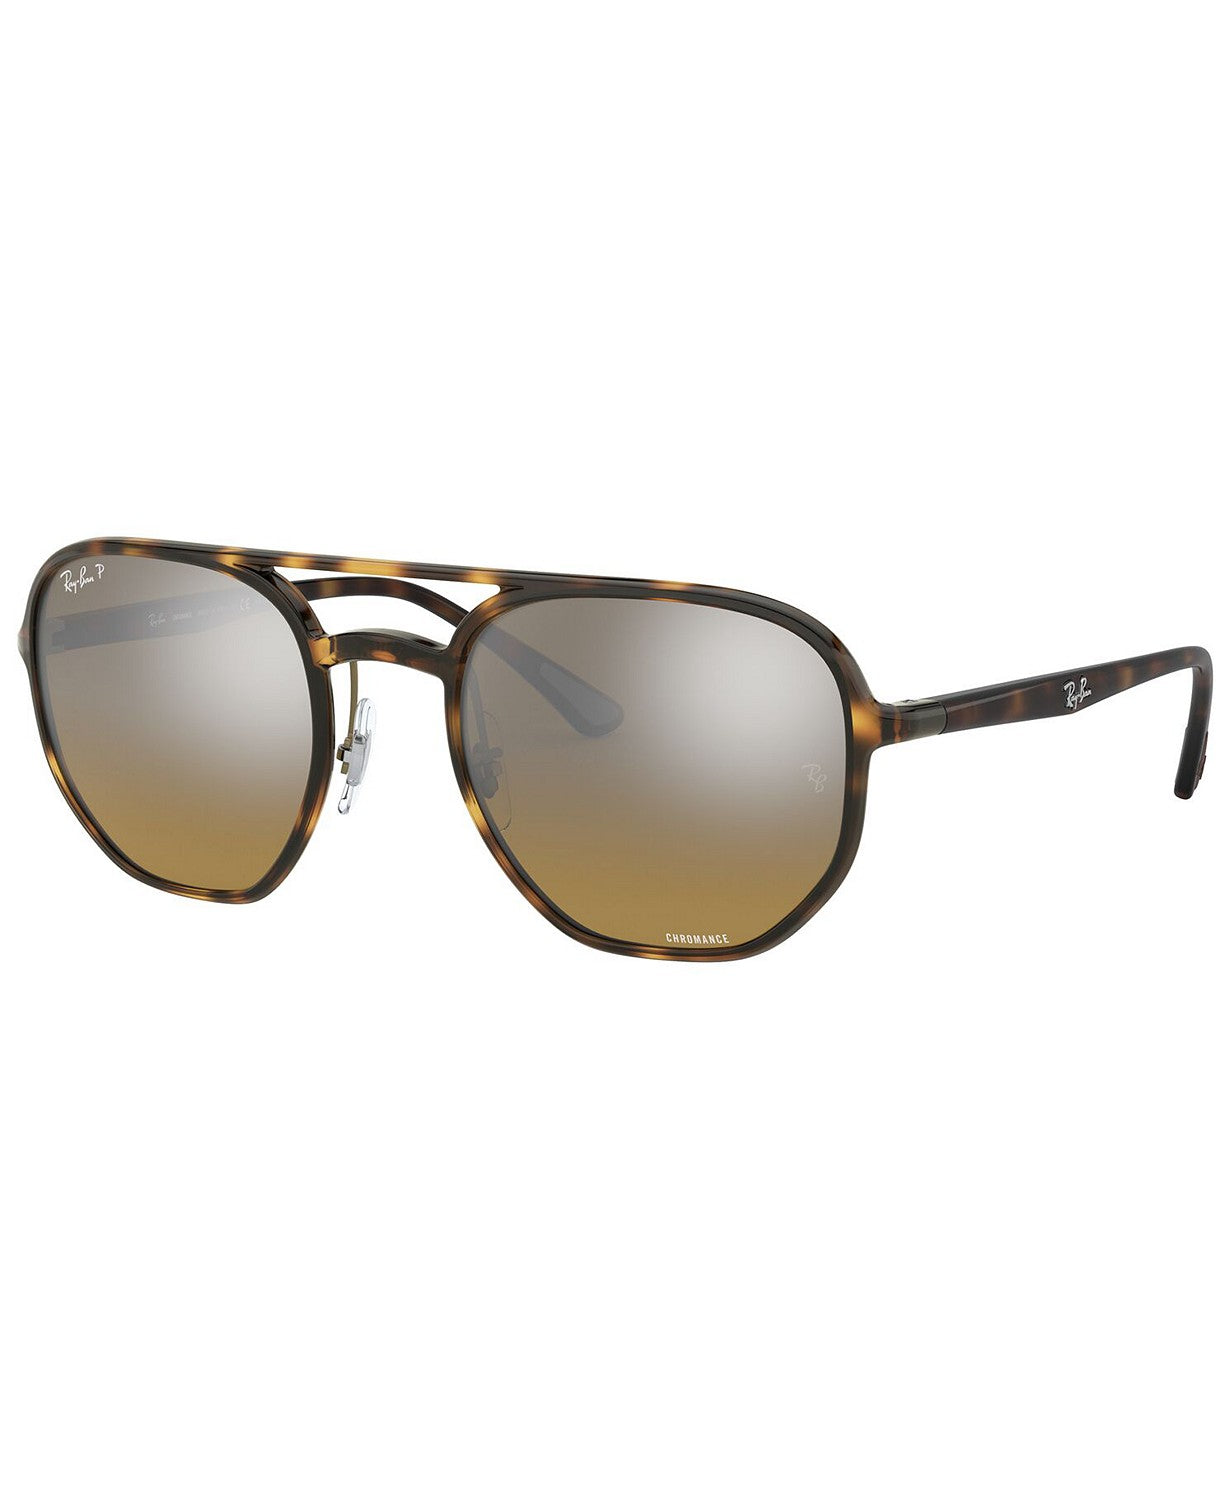 Ray Ban Havana Polarized Sunglasses Brown GreyGradient Oversized